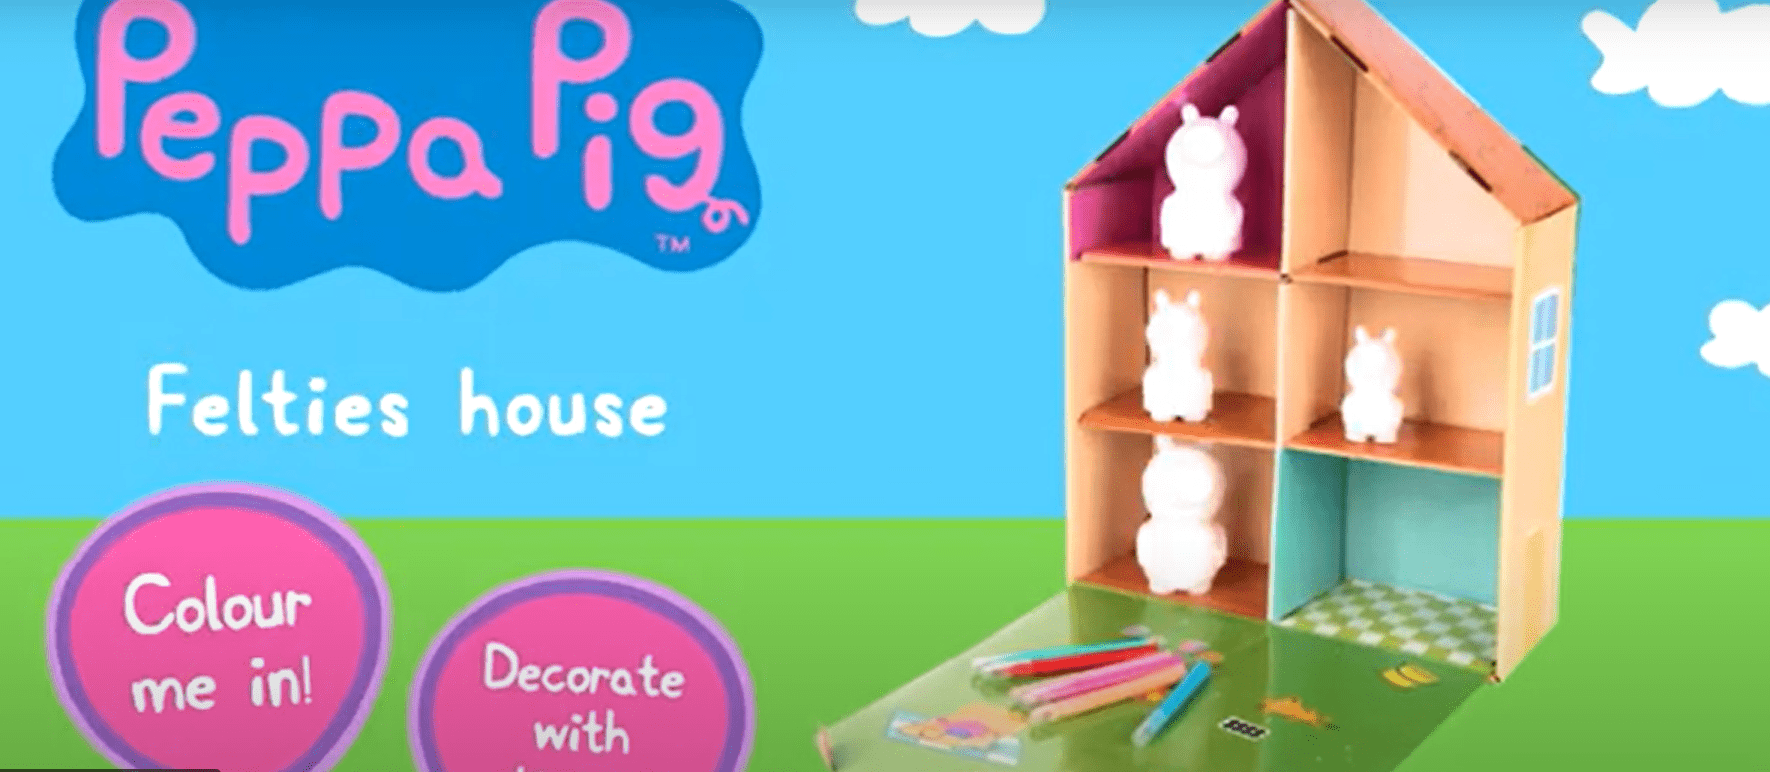 Peppa Pig House Felties House